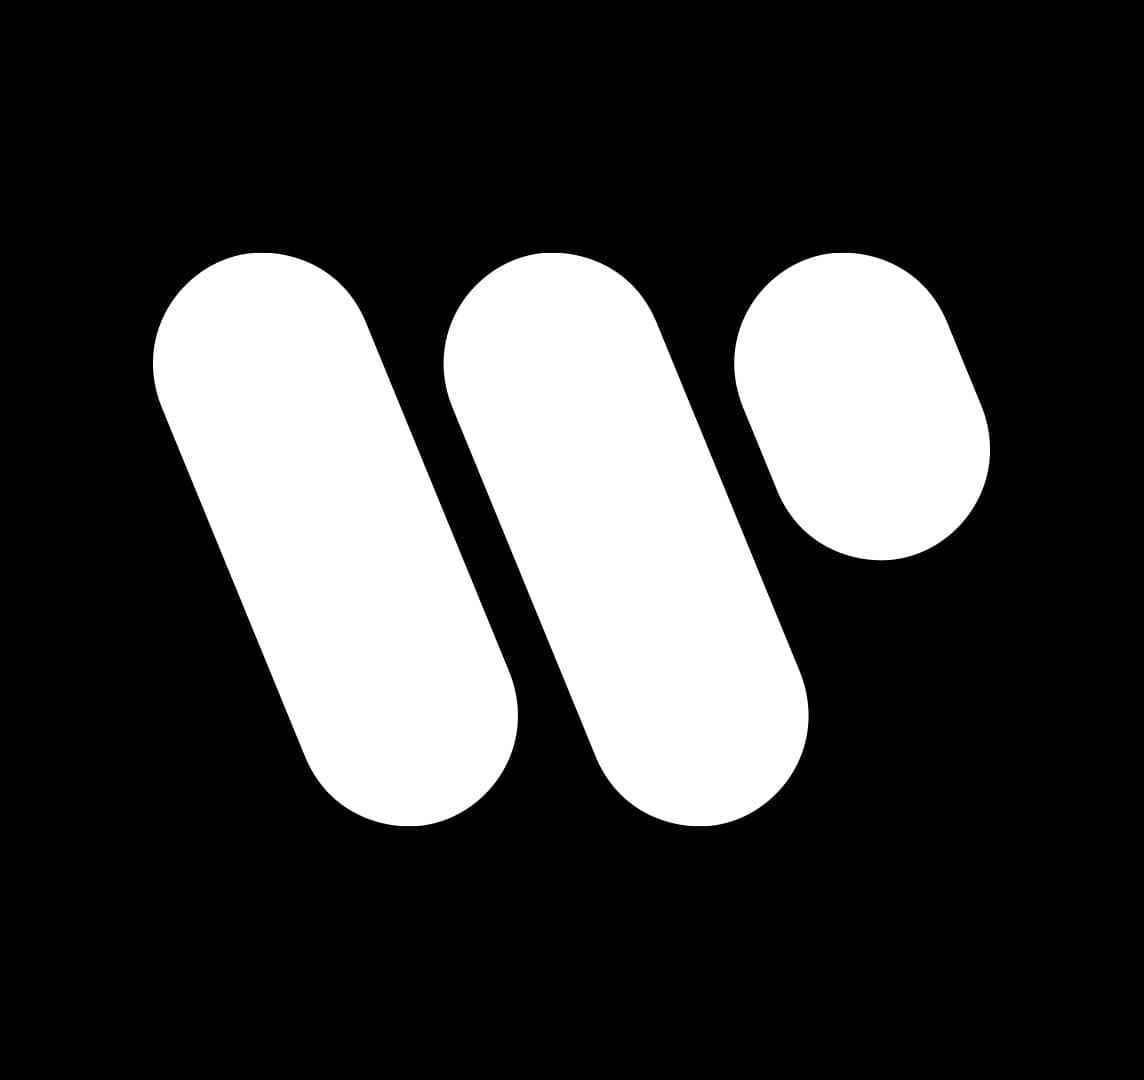 Warner logo